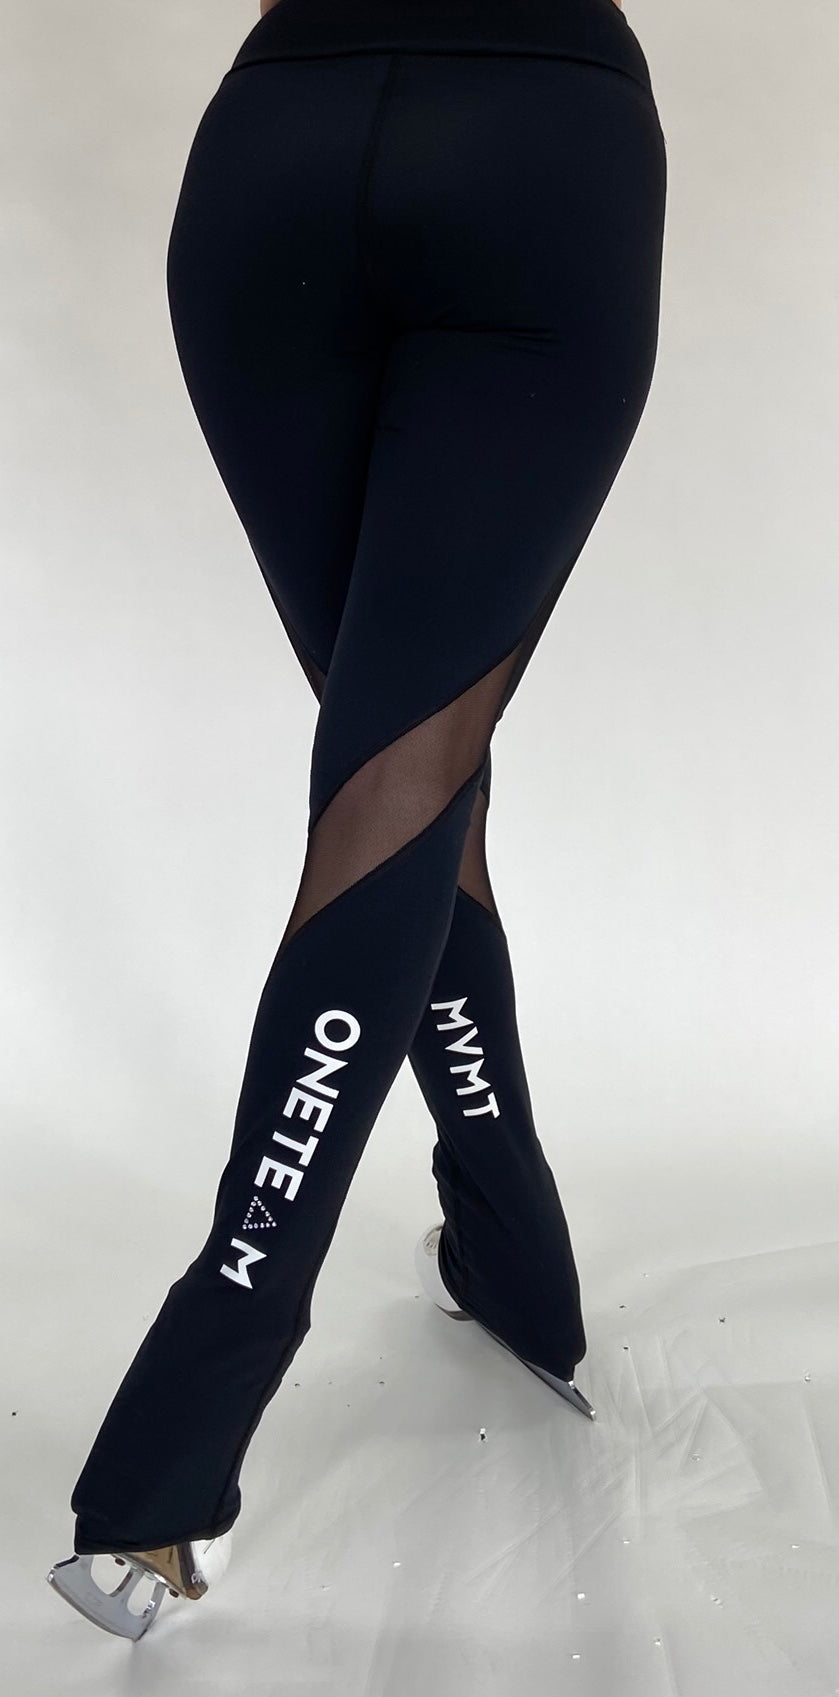 OTM Elite Legging - Mesh and Crystal Accents ($CAD) – OneTeamMVMT